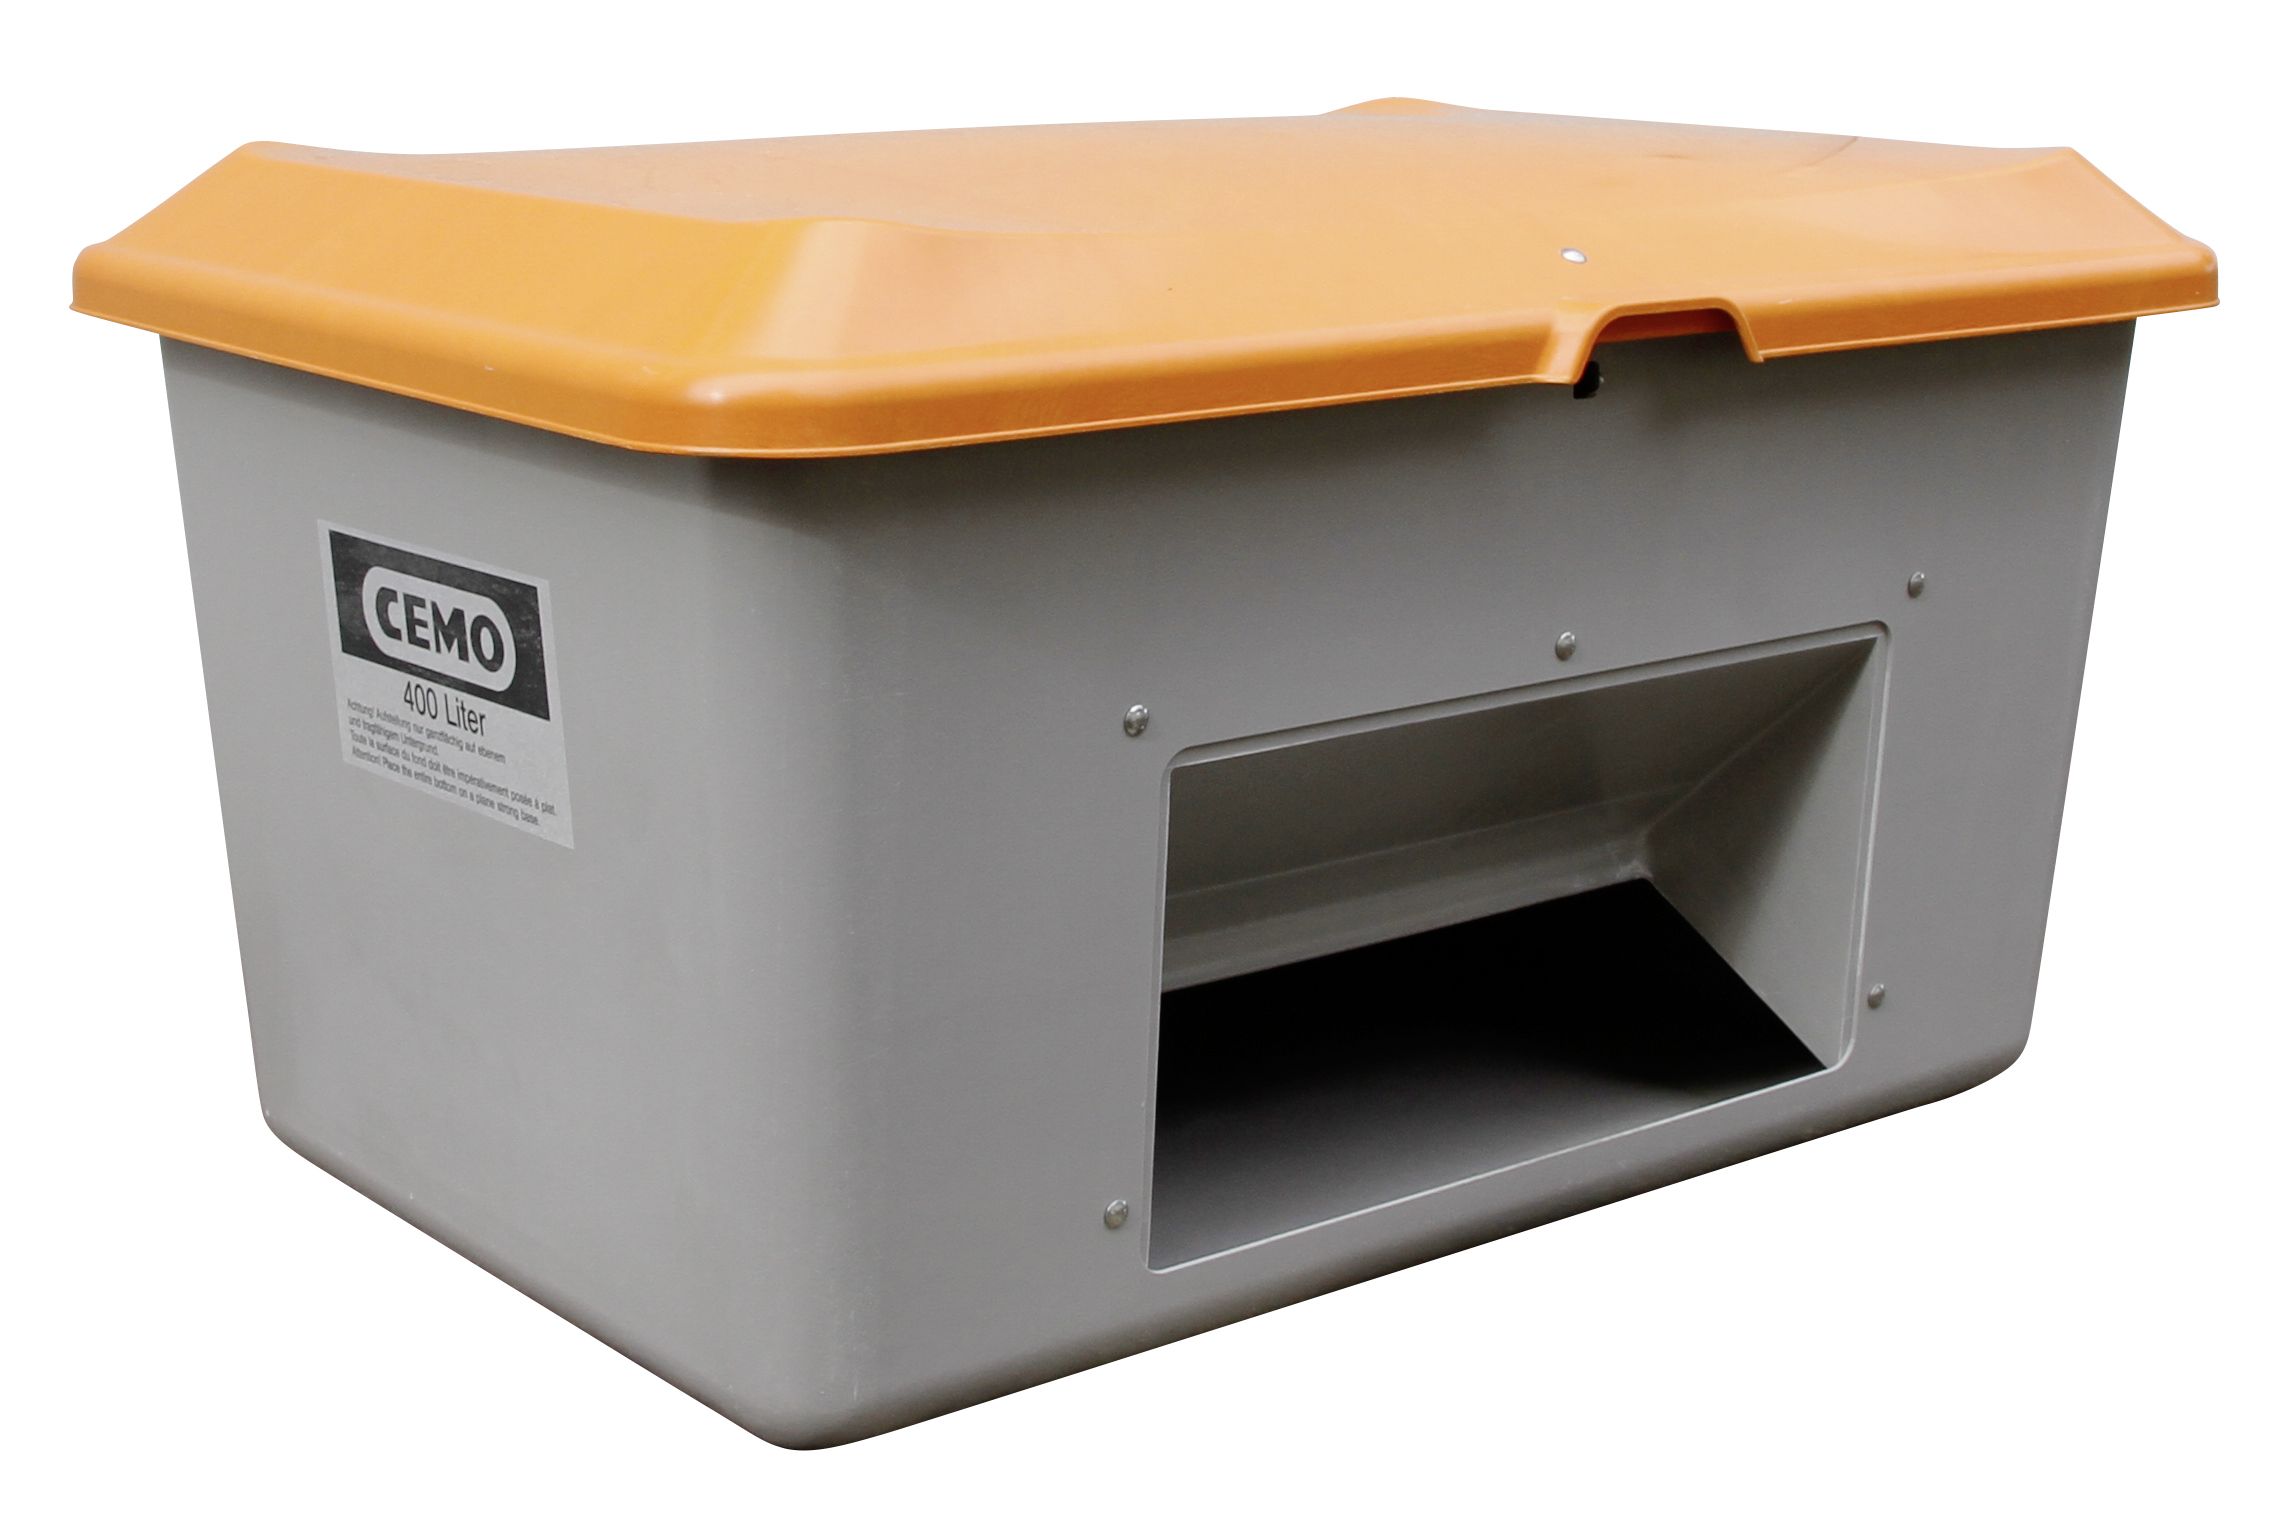 CEMO GFK Streugutbehälter PLUS3, 400 l, grau/orange - 10570